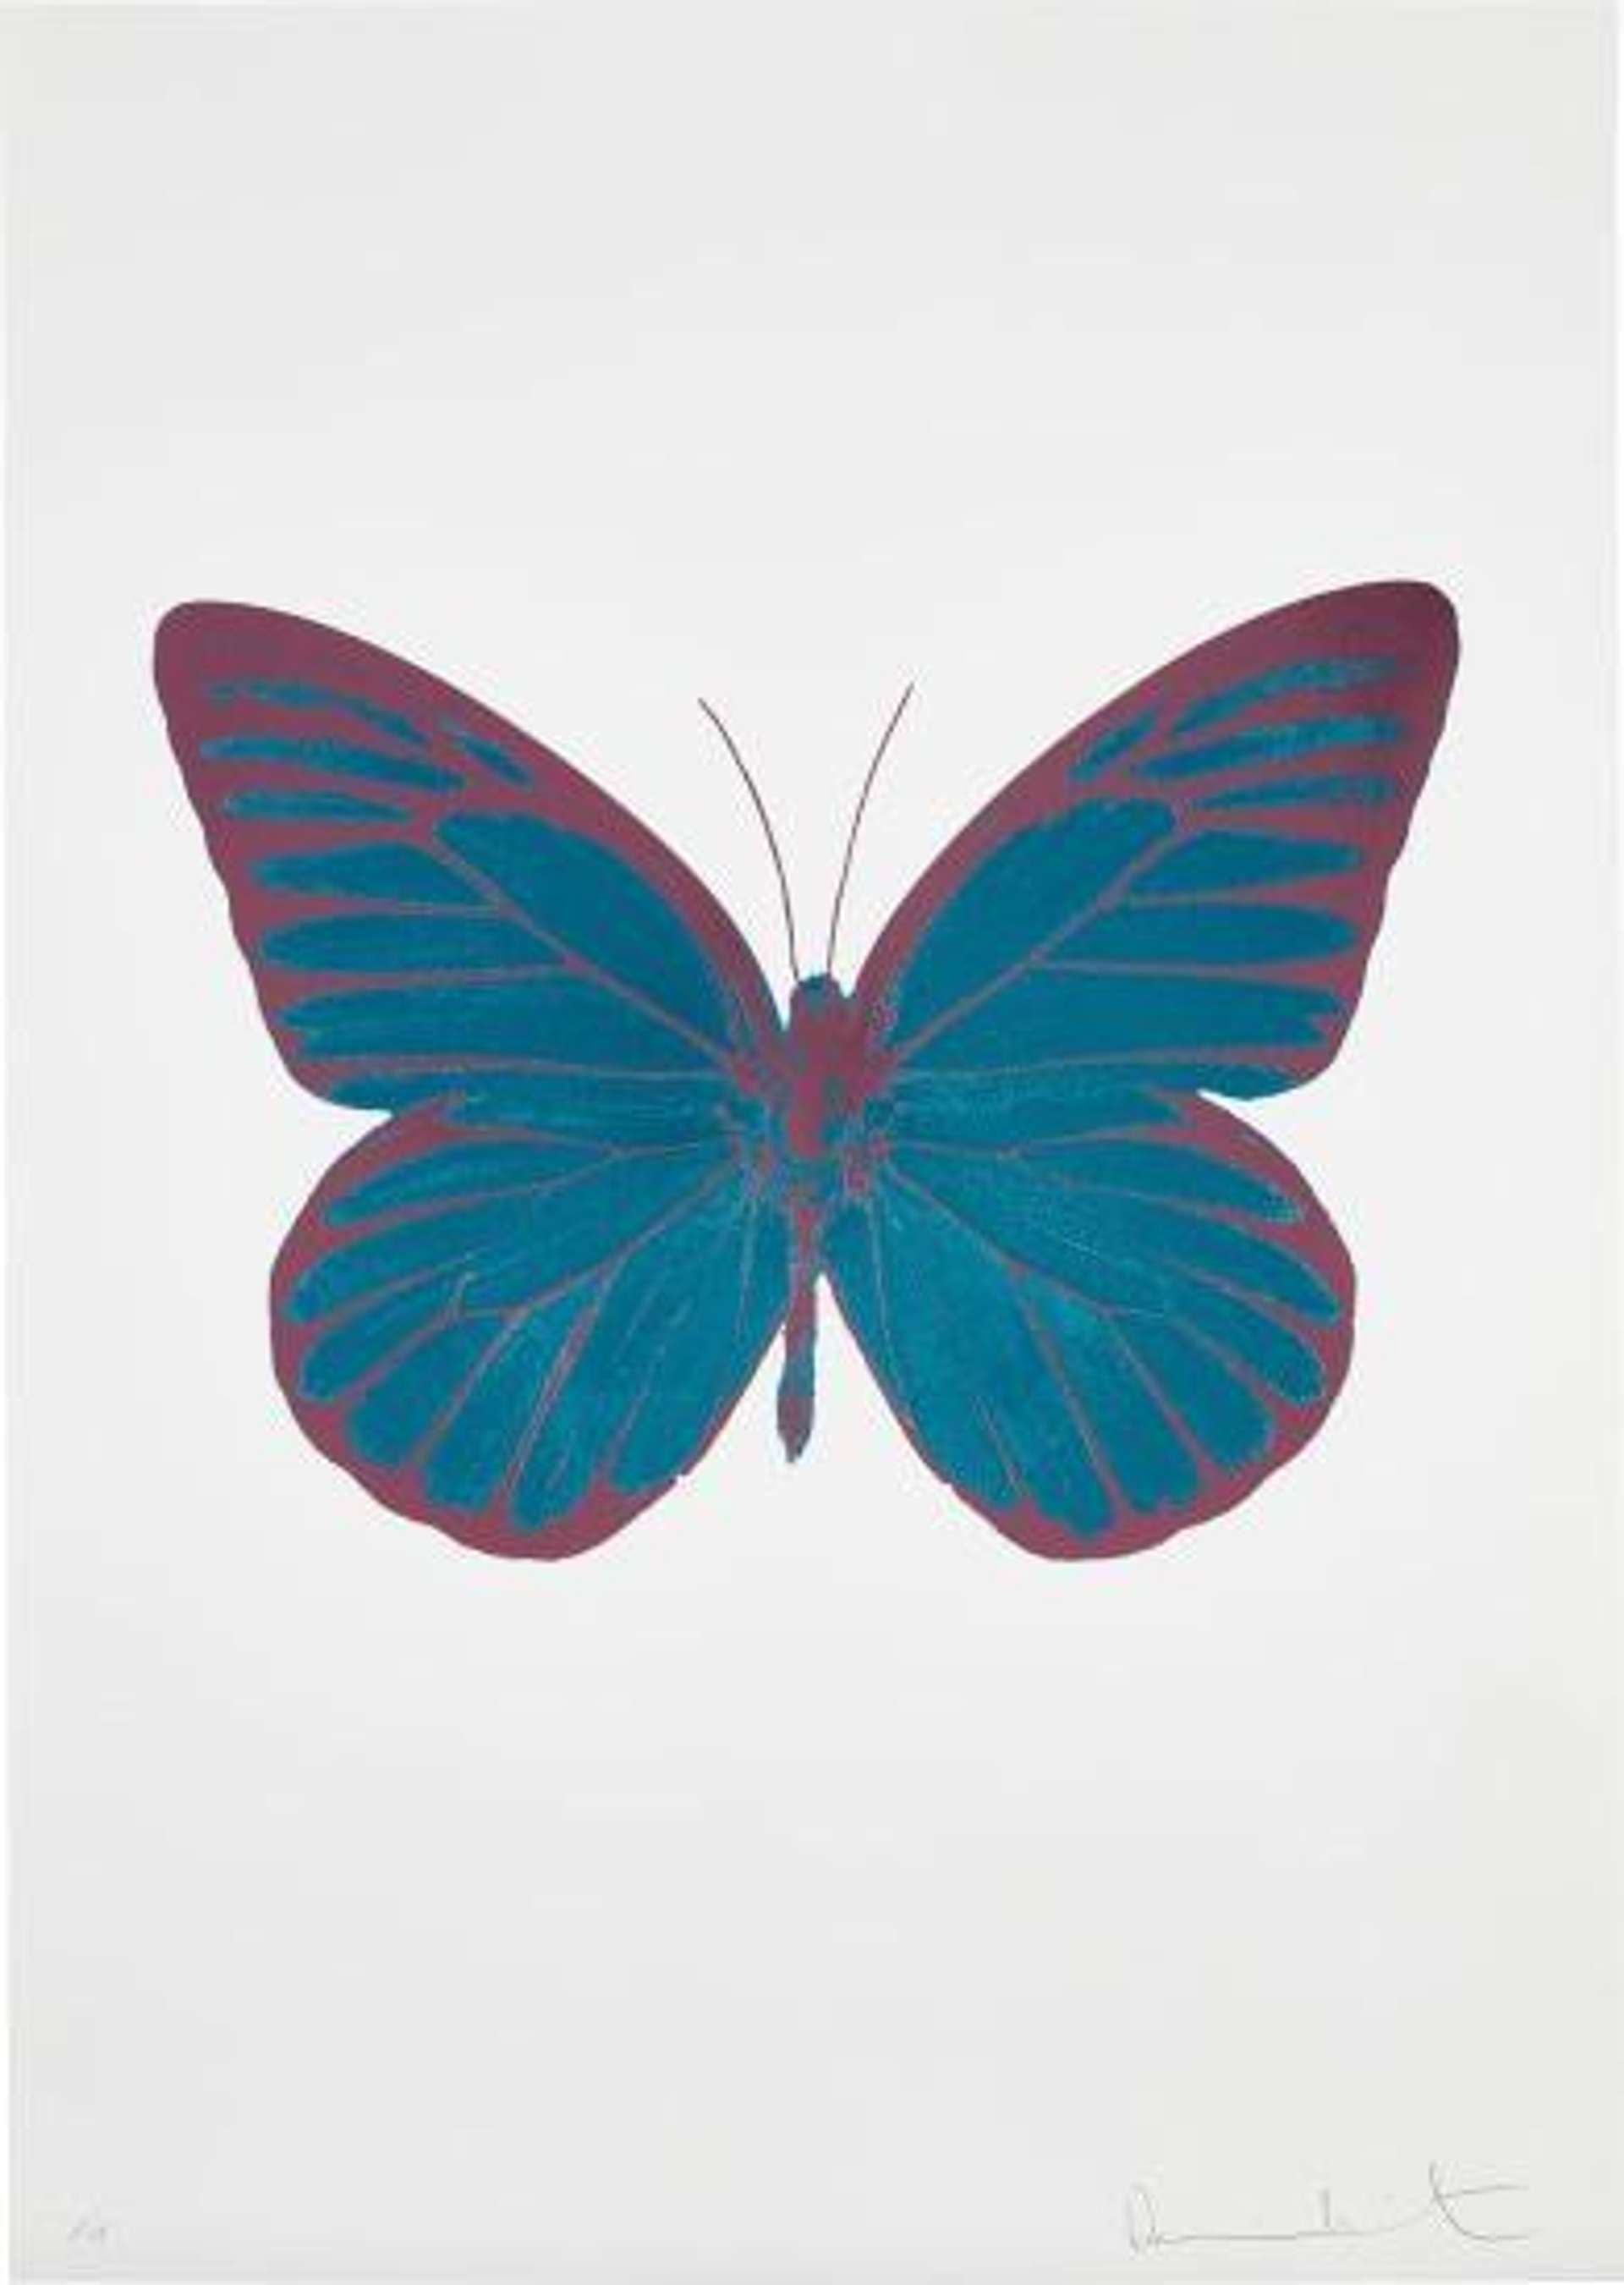 Damien Hirst: The Souls I (turquoise, blind impression, loganberry pink) - Signed Print